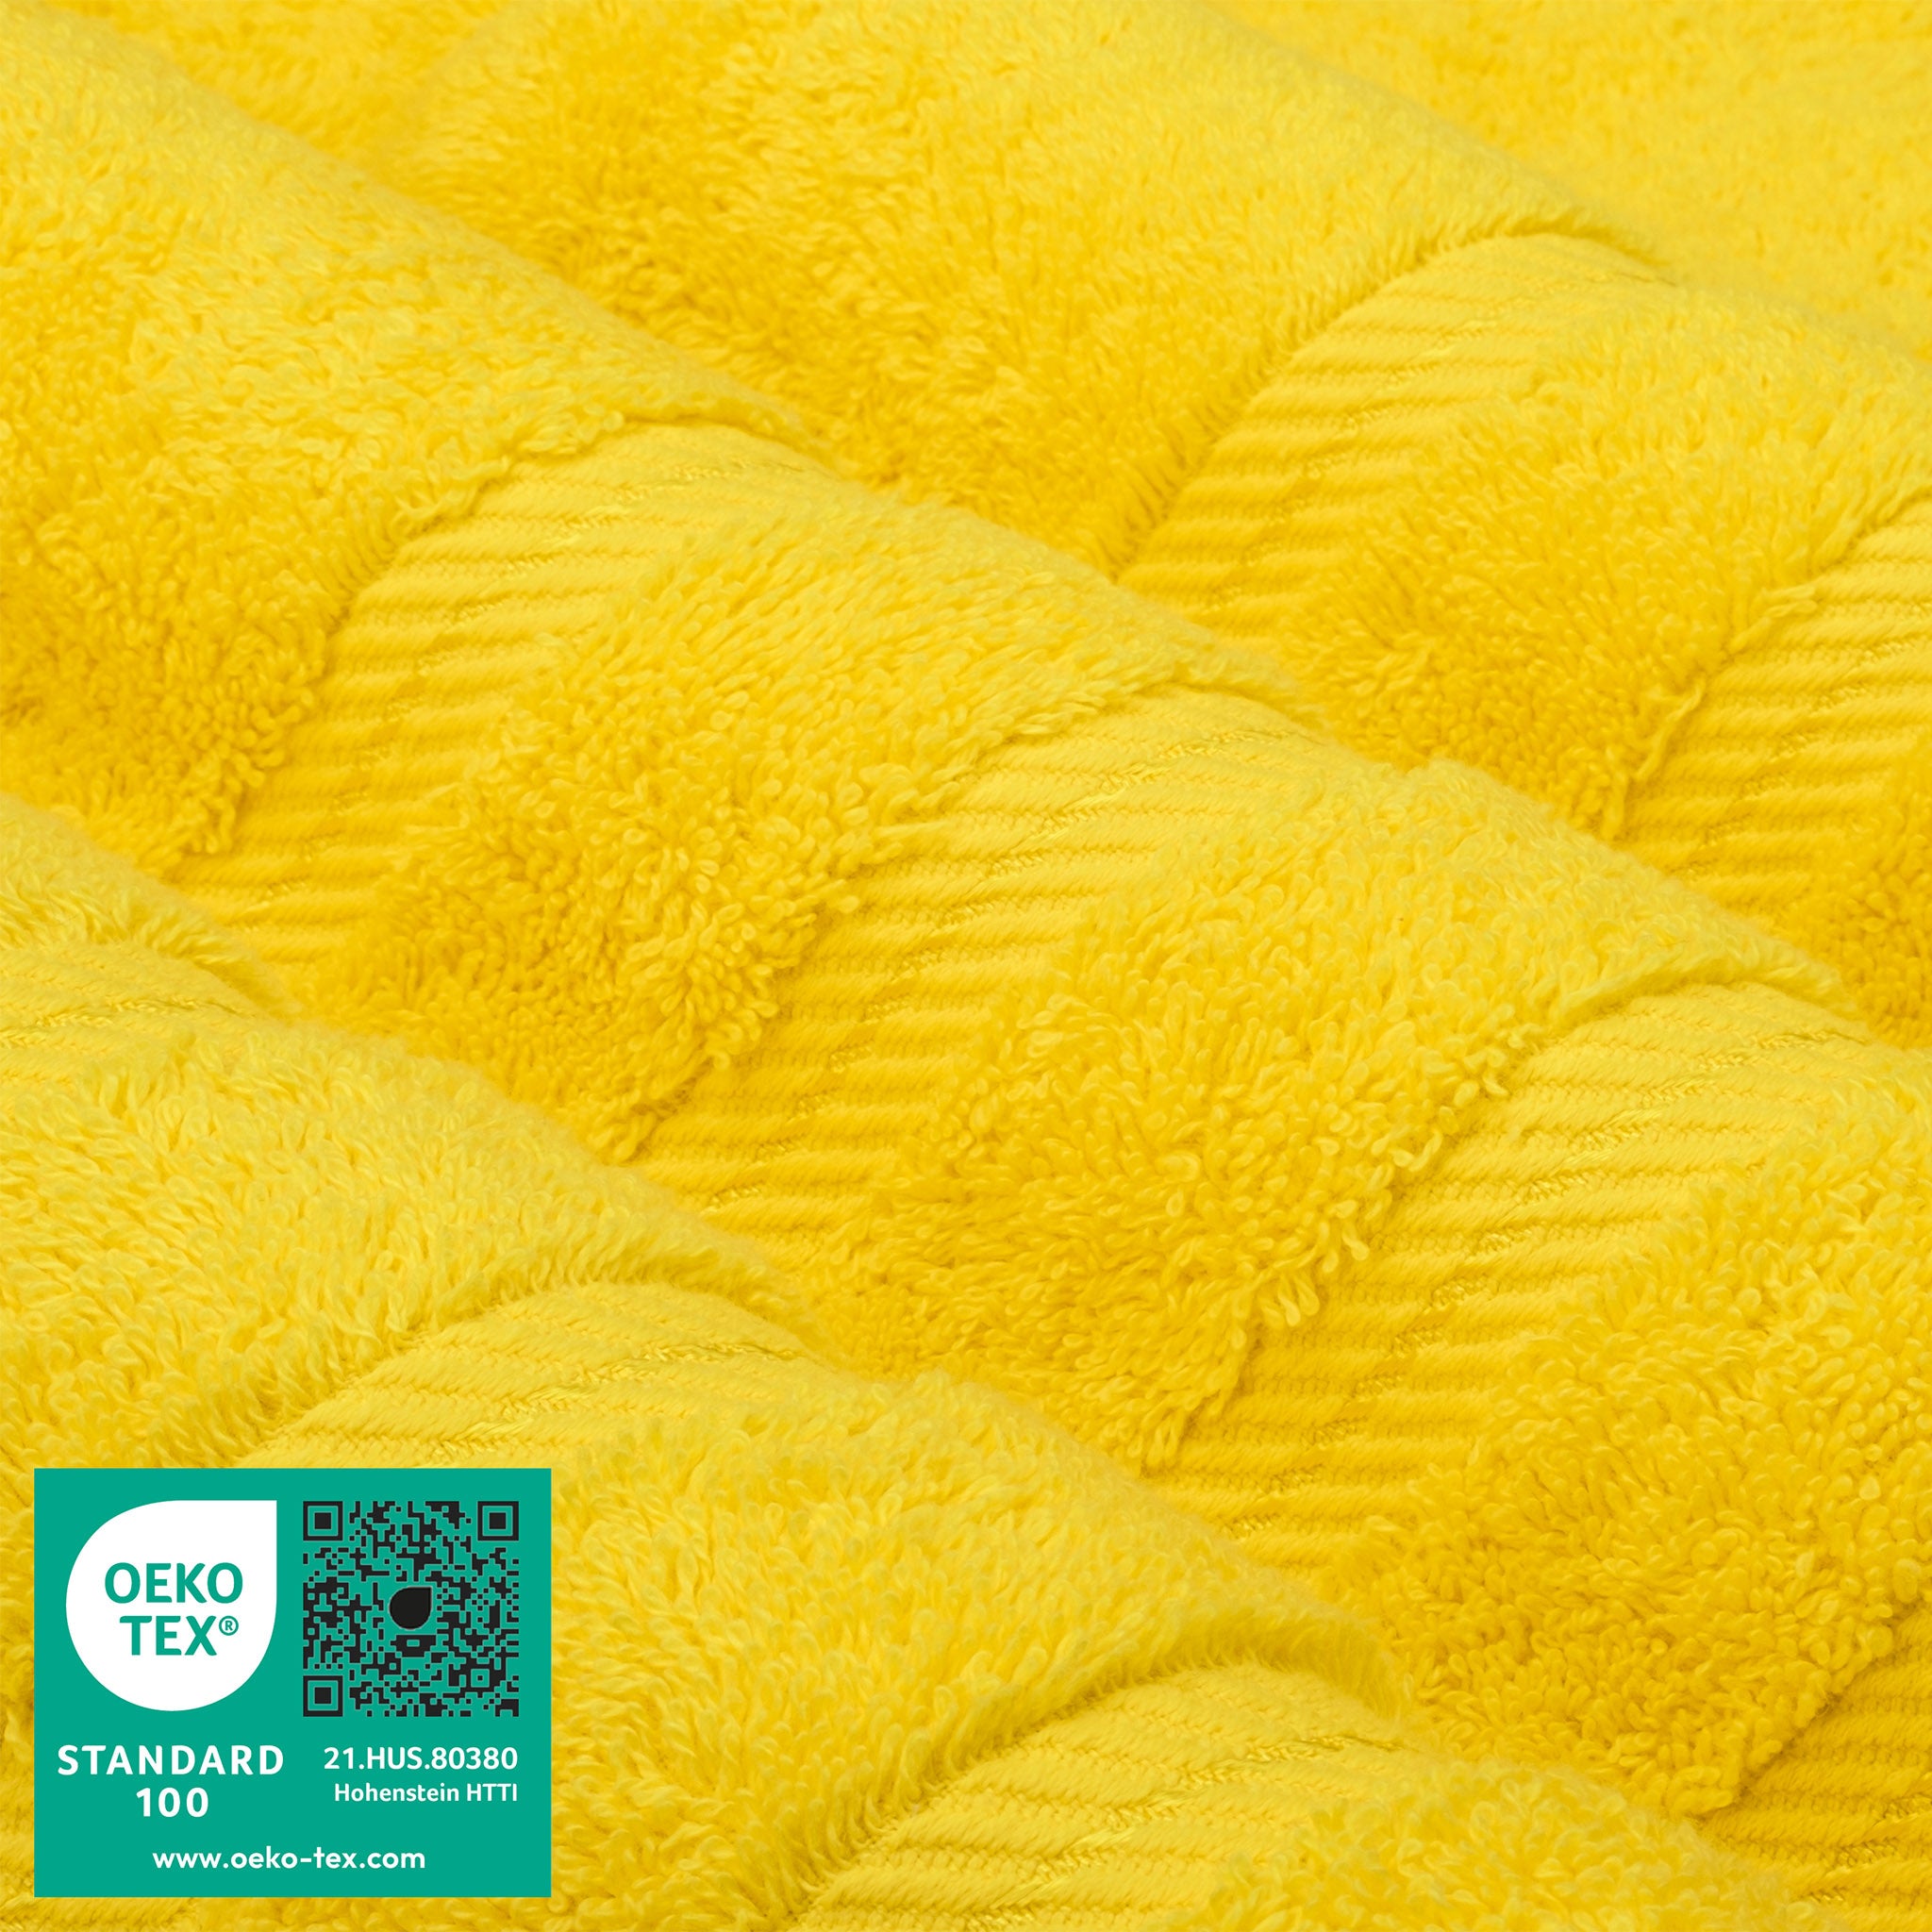 American Soft Linen 100% Turkish Cotton 6 Piece Towel Set Wholesale yellow-3